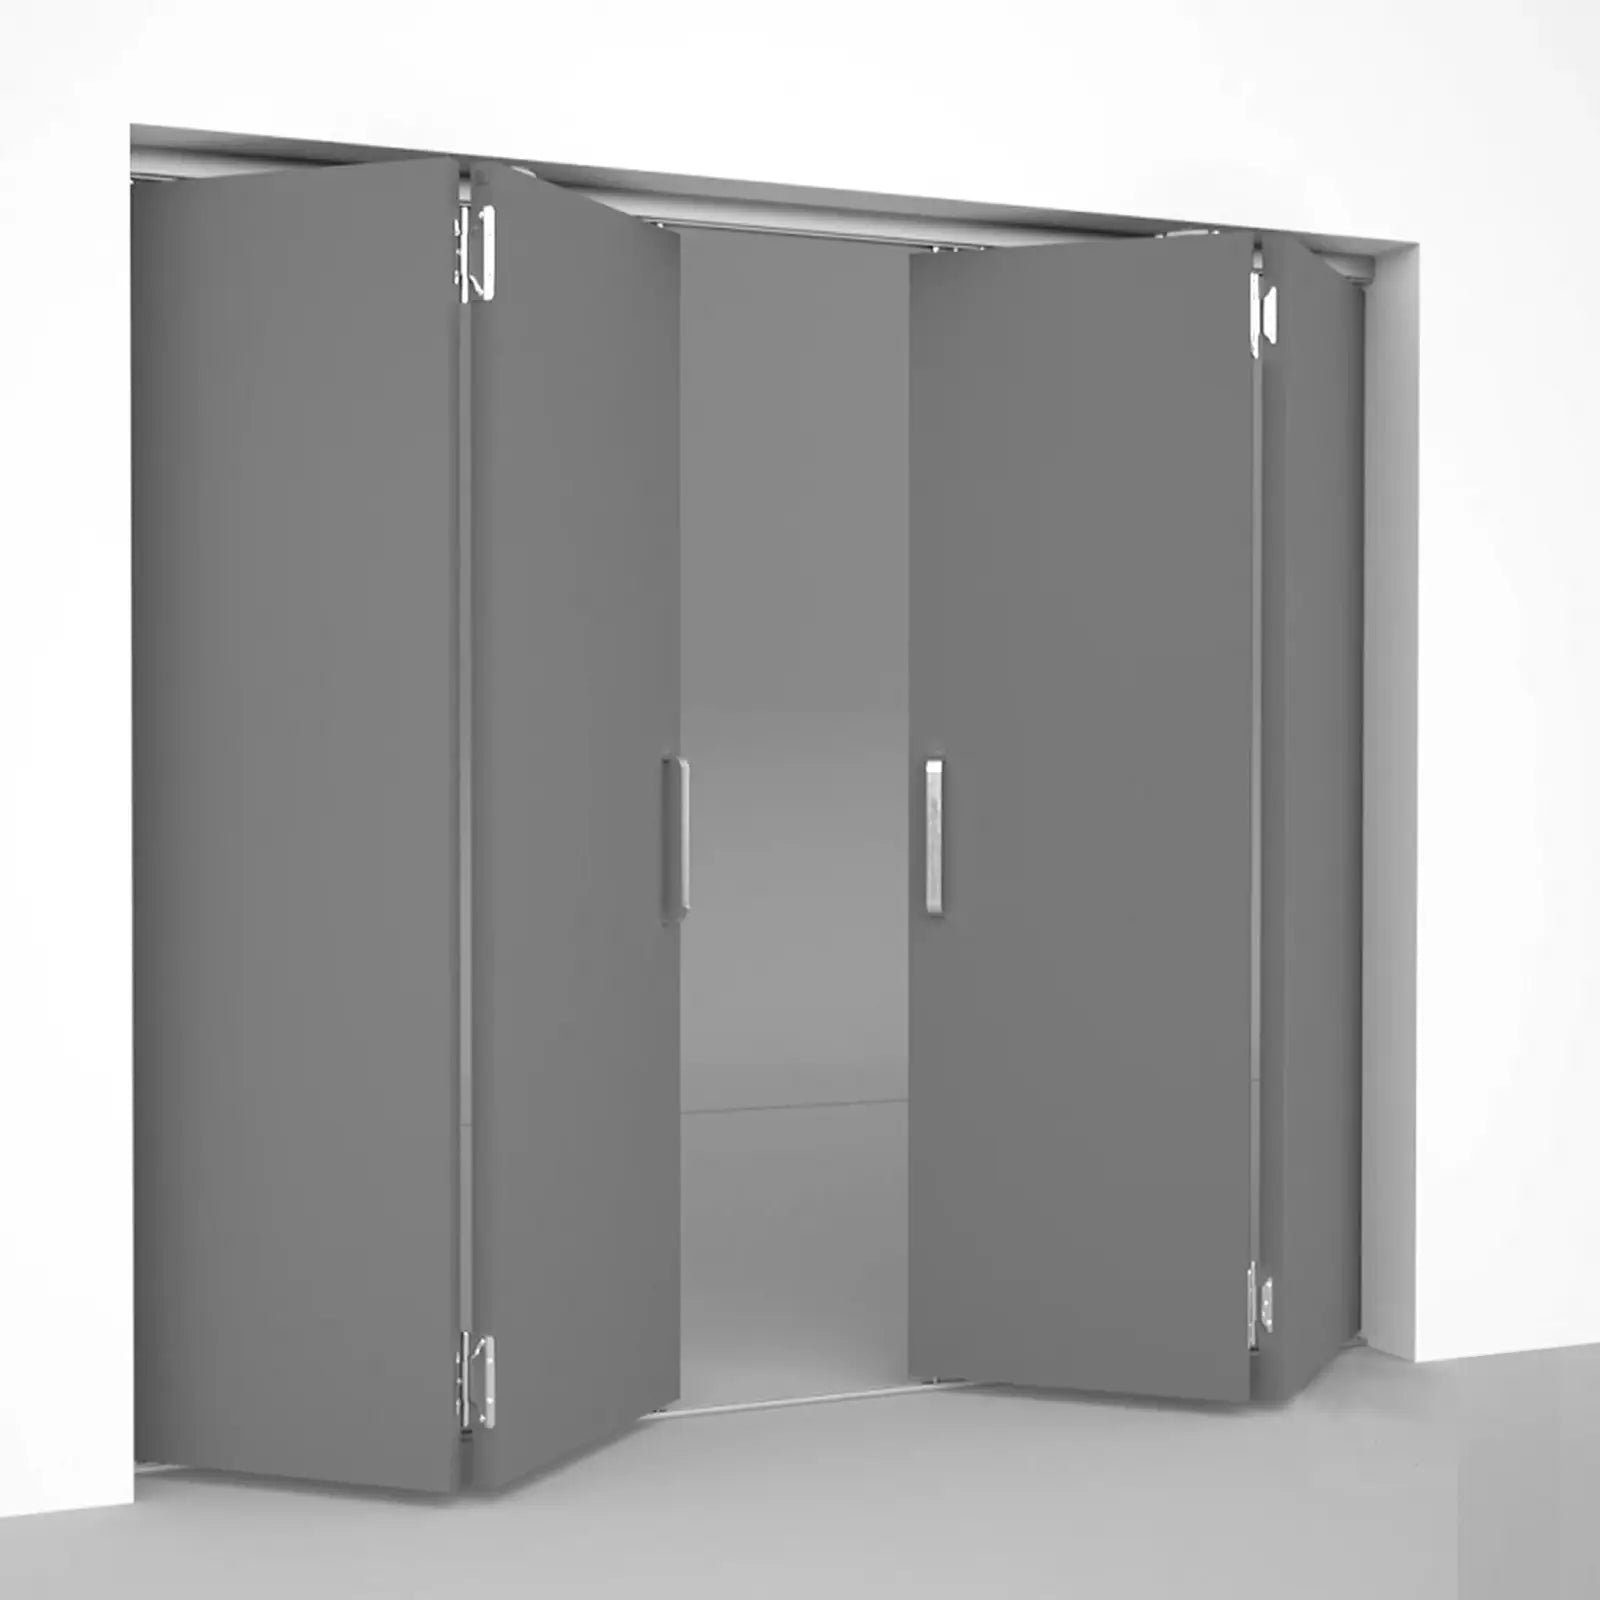 BiFold Folding Sliding Door Gear System Kit 60KG Per Door Capacity - Decor And Decor